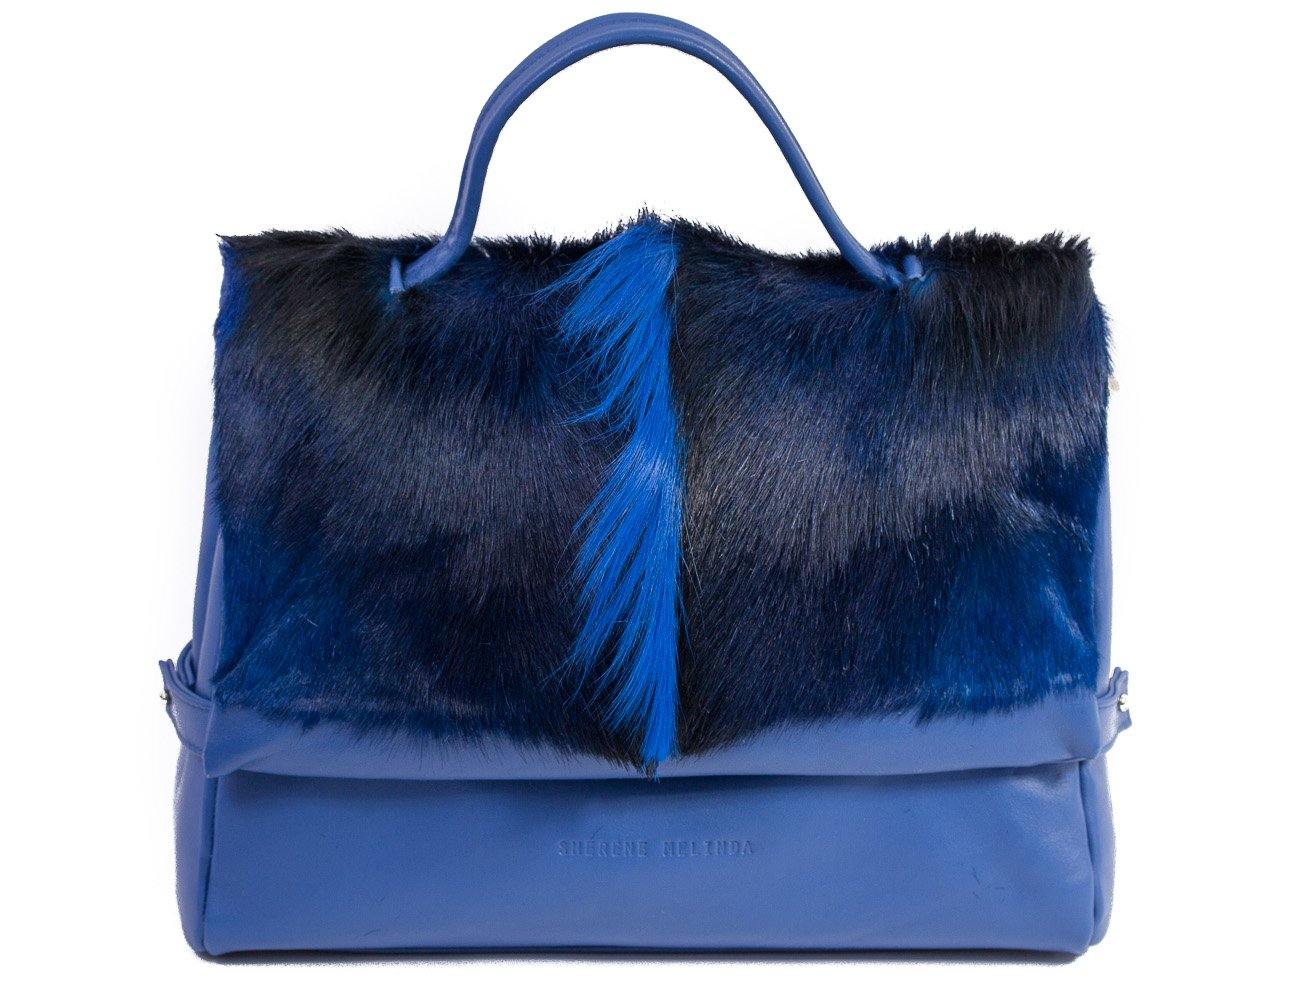 sherene melinda springbok hair-on-hide royal blue leather smith tote bag fan front strap